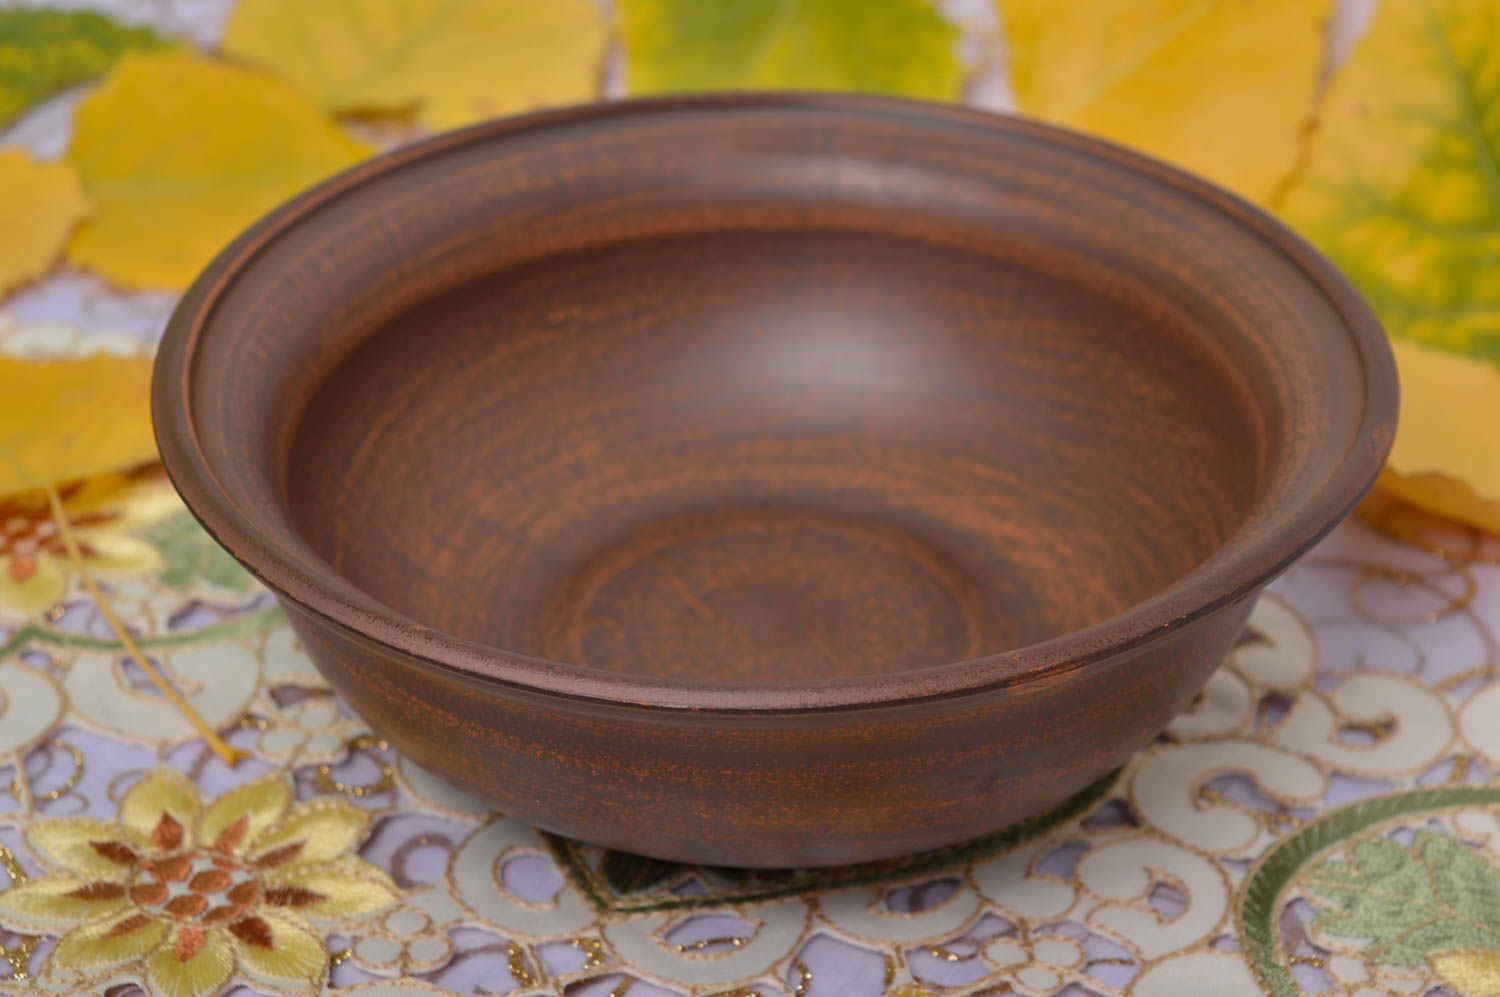 Handmade pottery bowl soup bowl ceramic dinnerware serving bowl kitchen decor photo 1